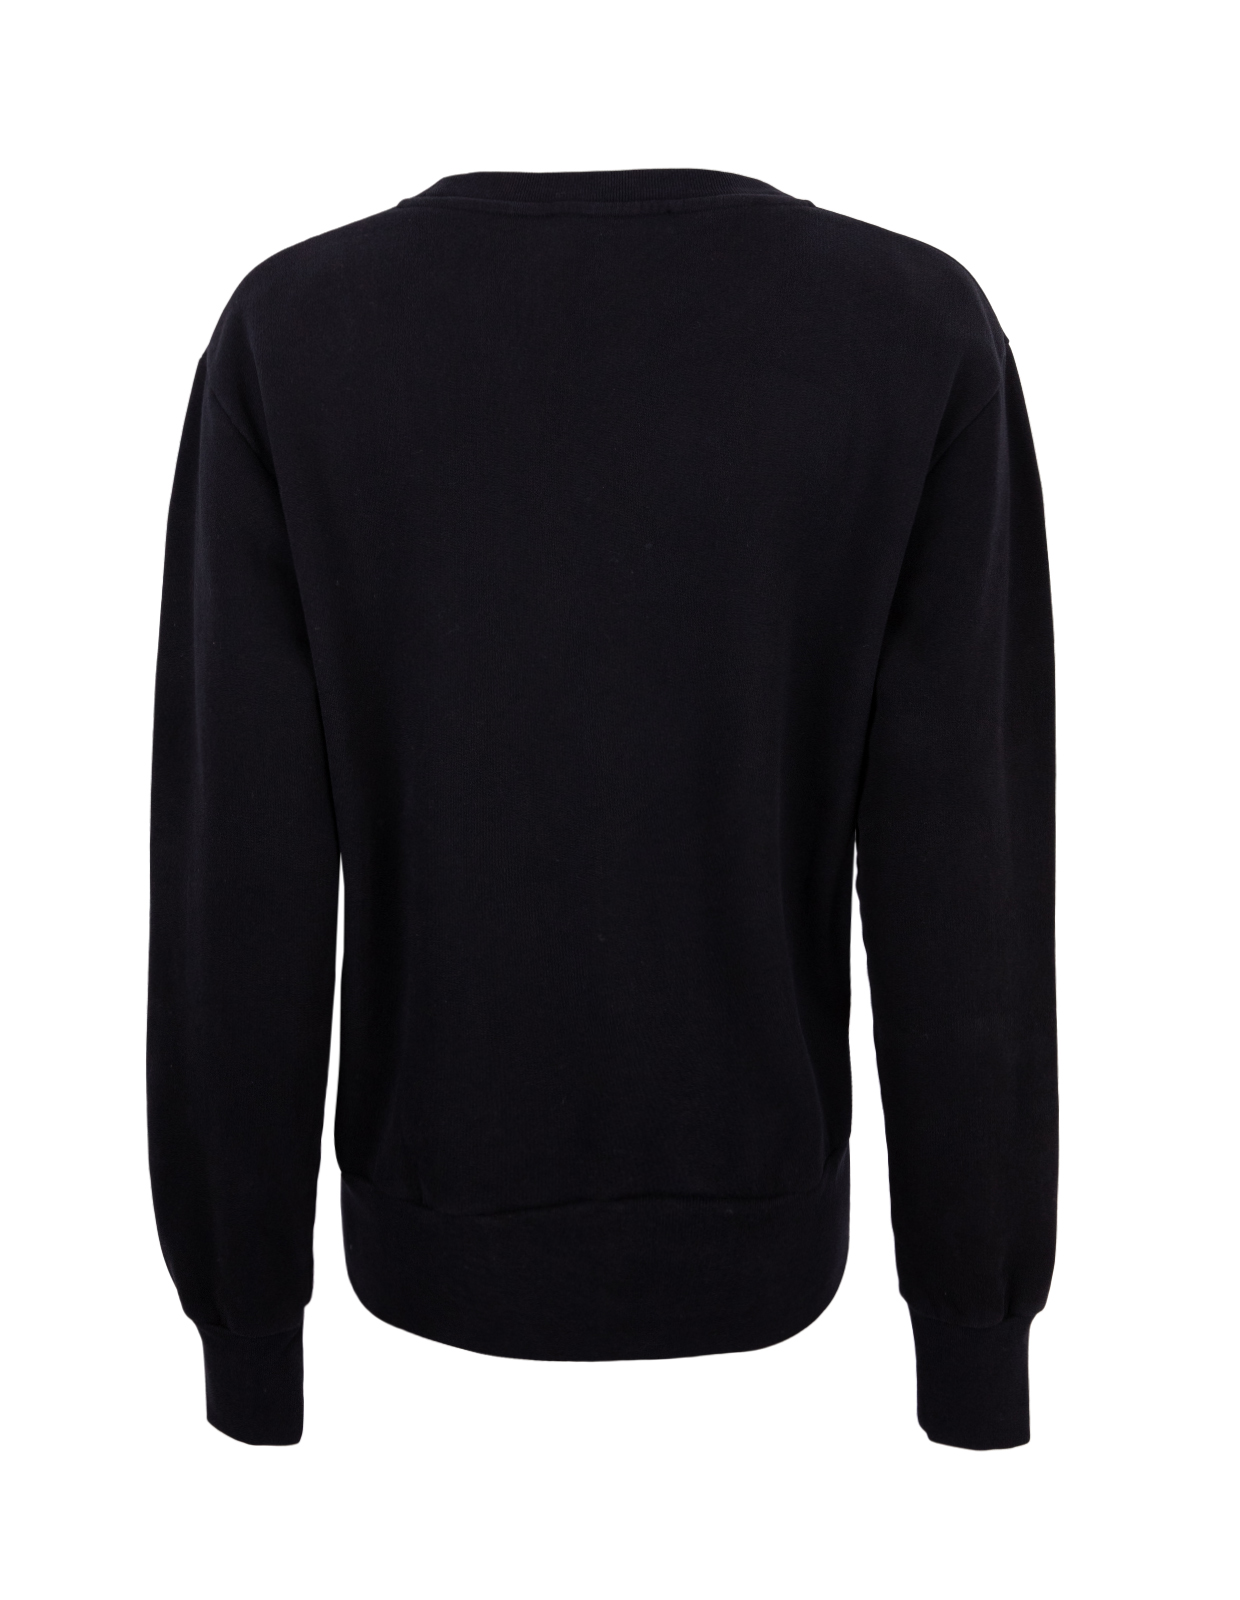 Beaded Sweatshirt Black